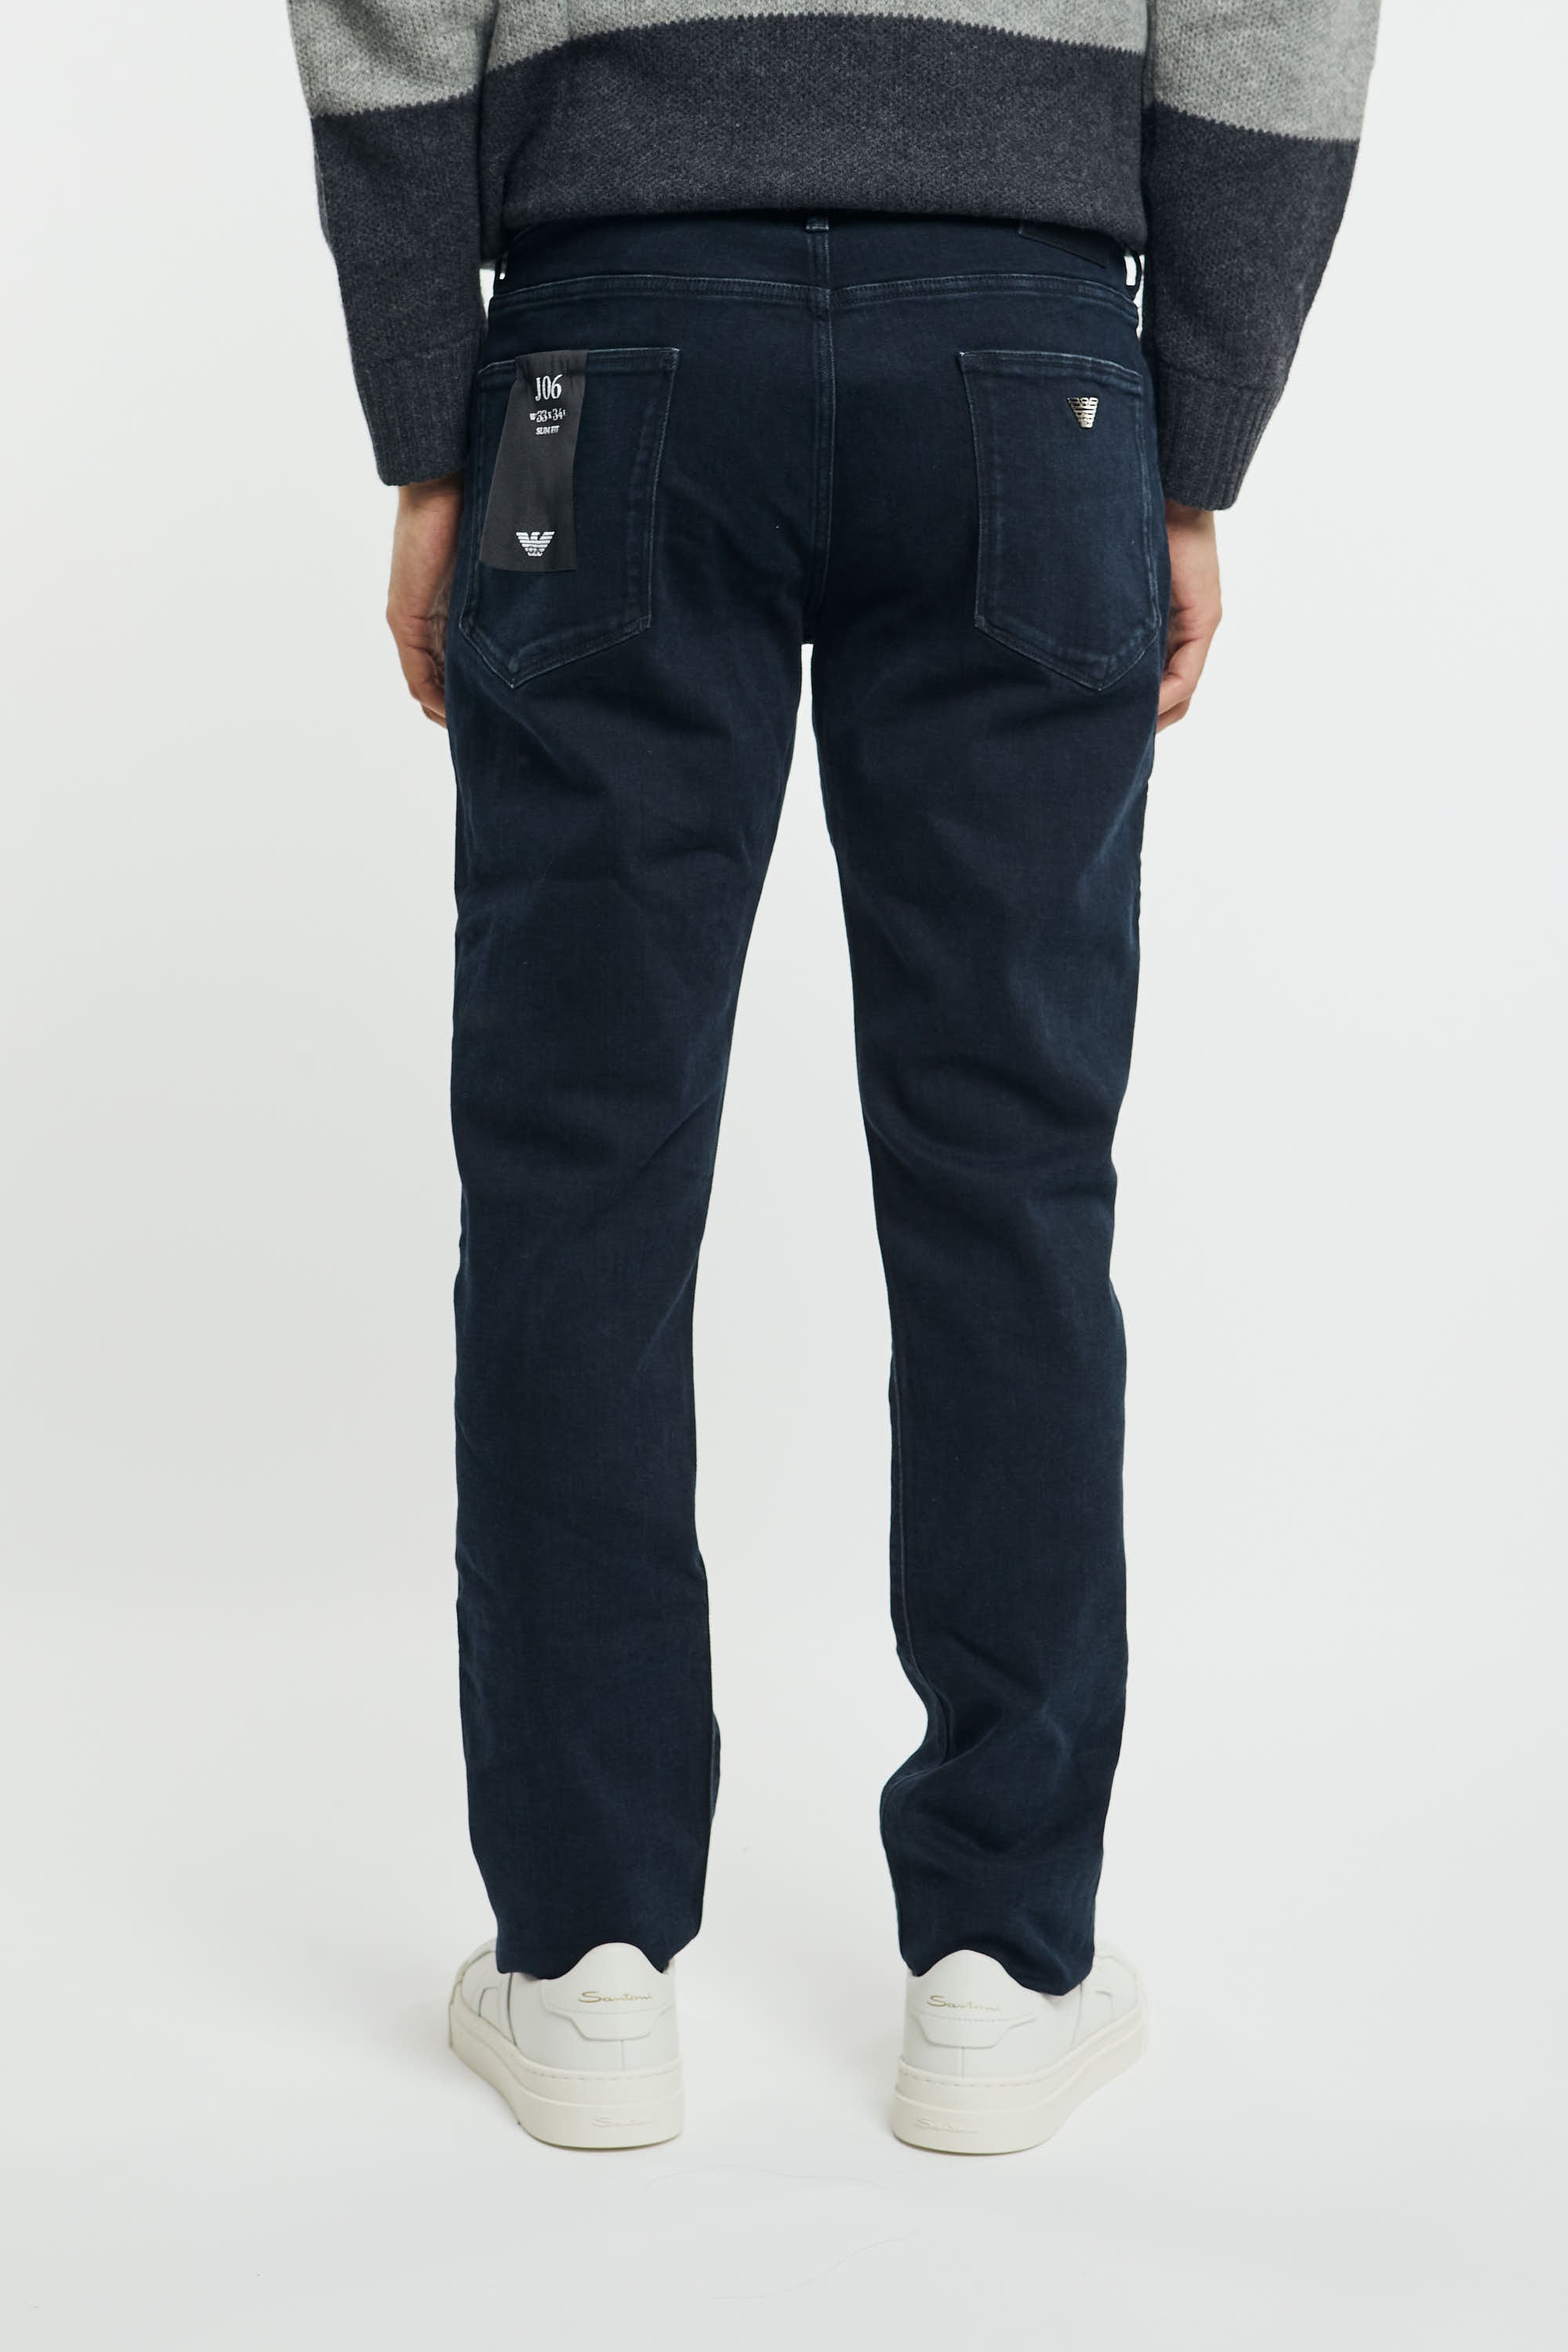 Emporio Armani Jeans J06 Slim Fit in Denim aus Stretch-Baumwolle Blau-6